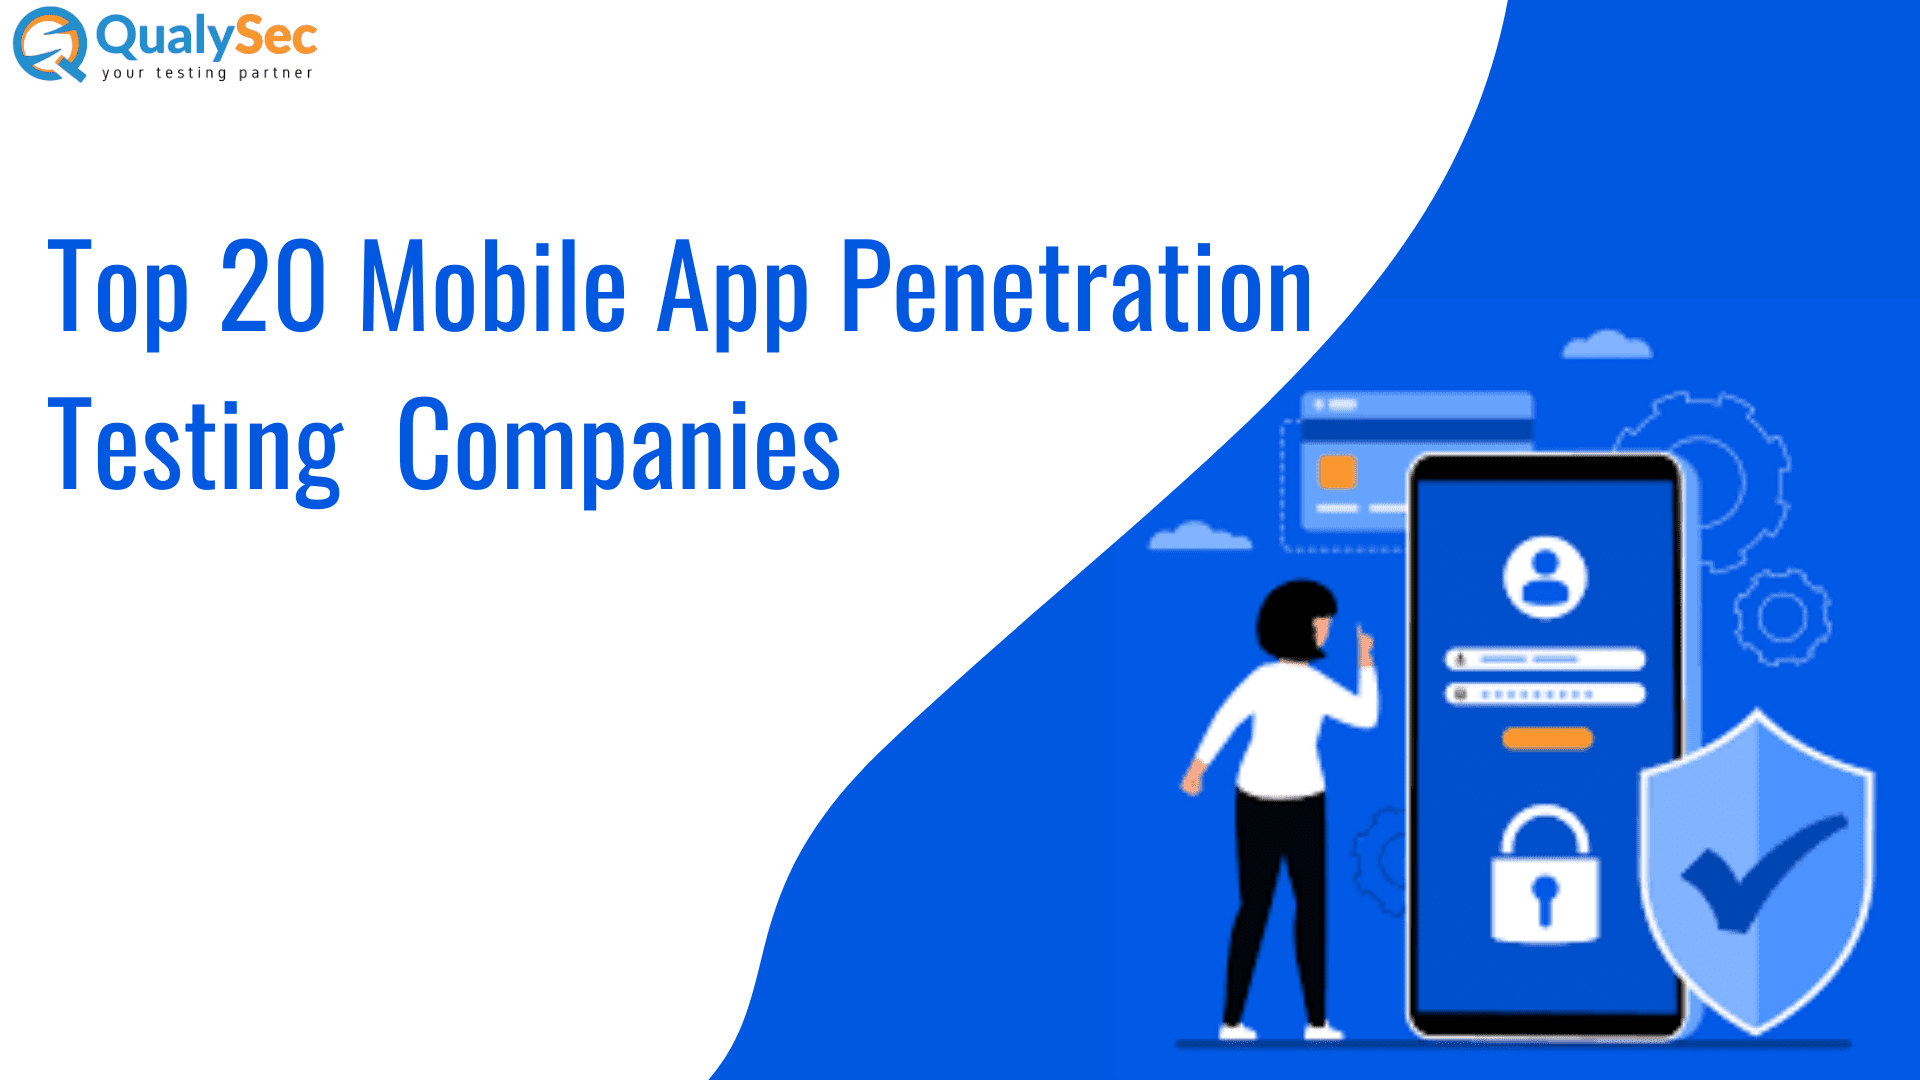 Top Mobile App Penetration Testing Companies In Qualysec